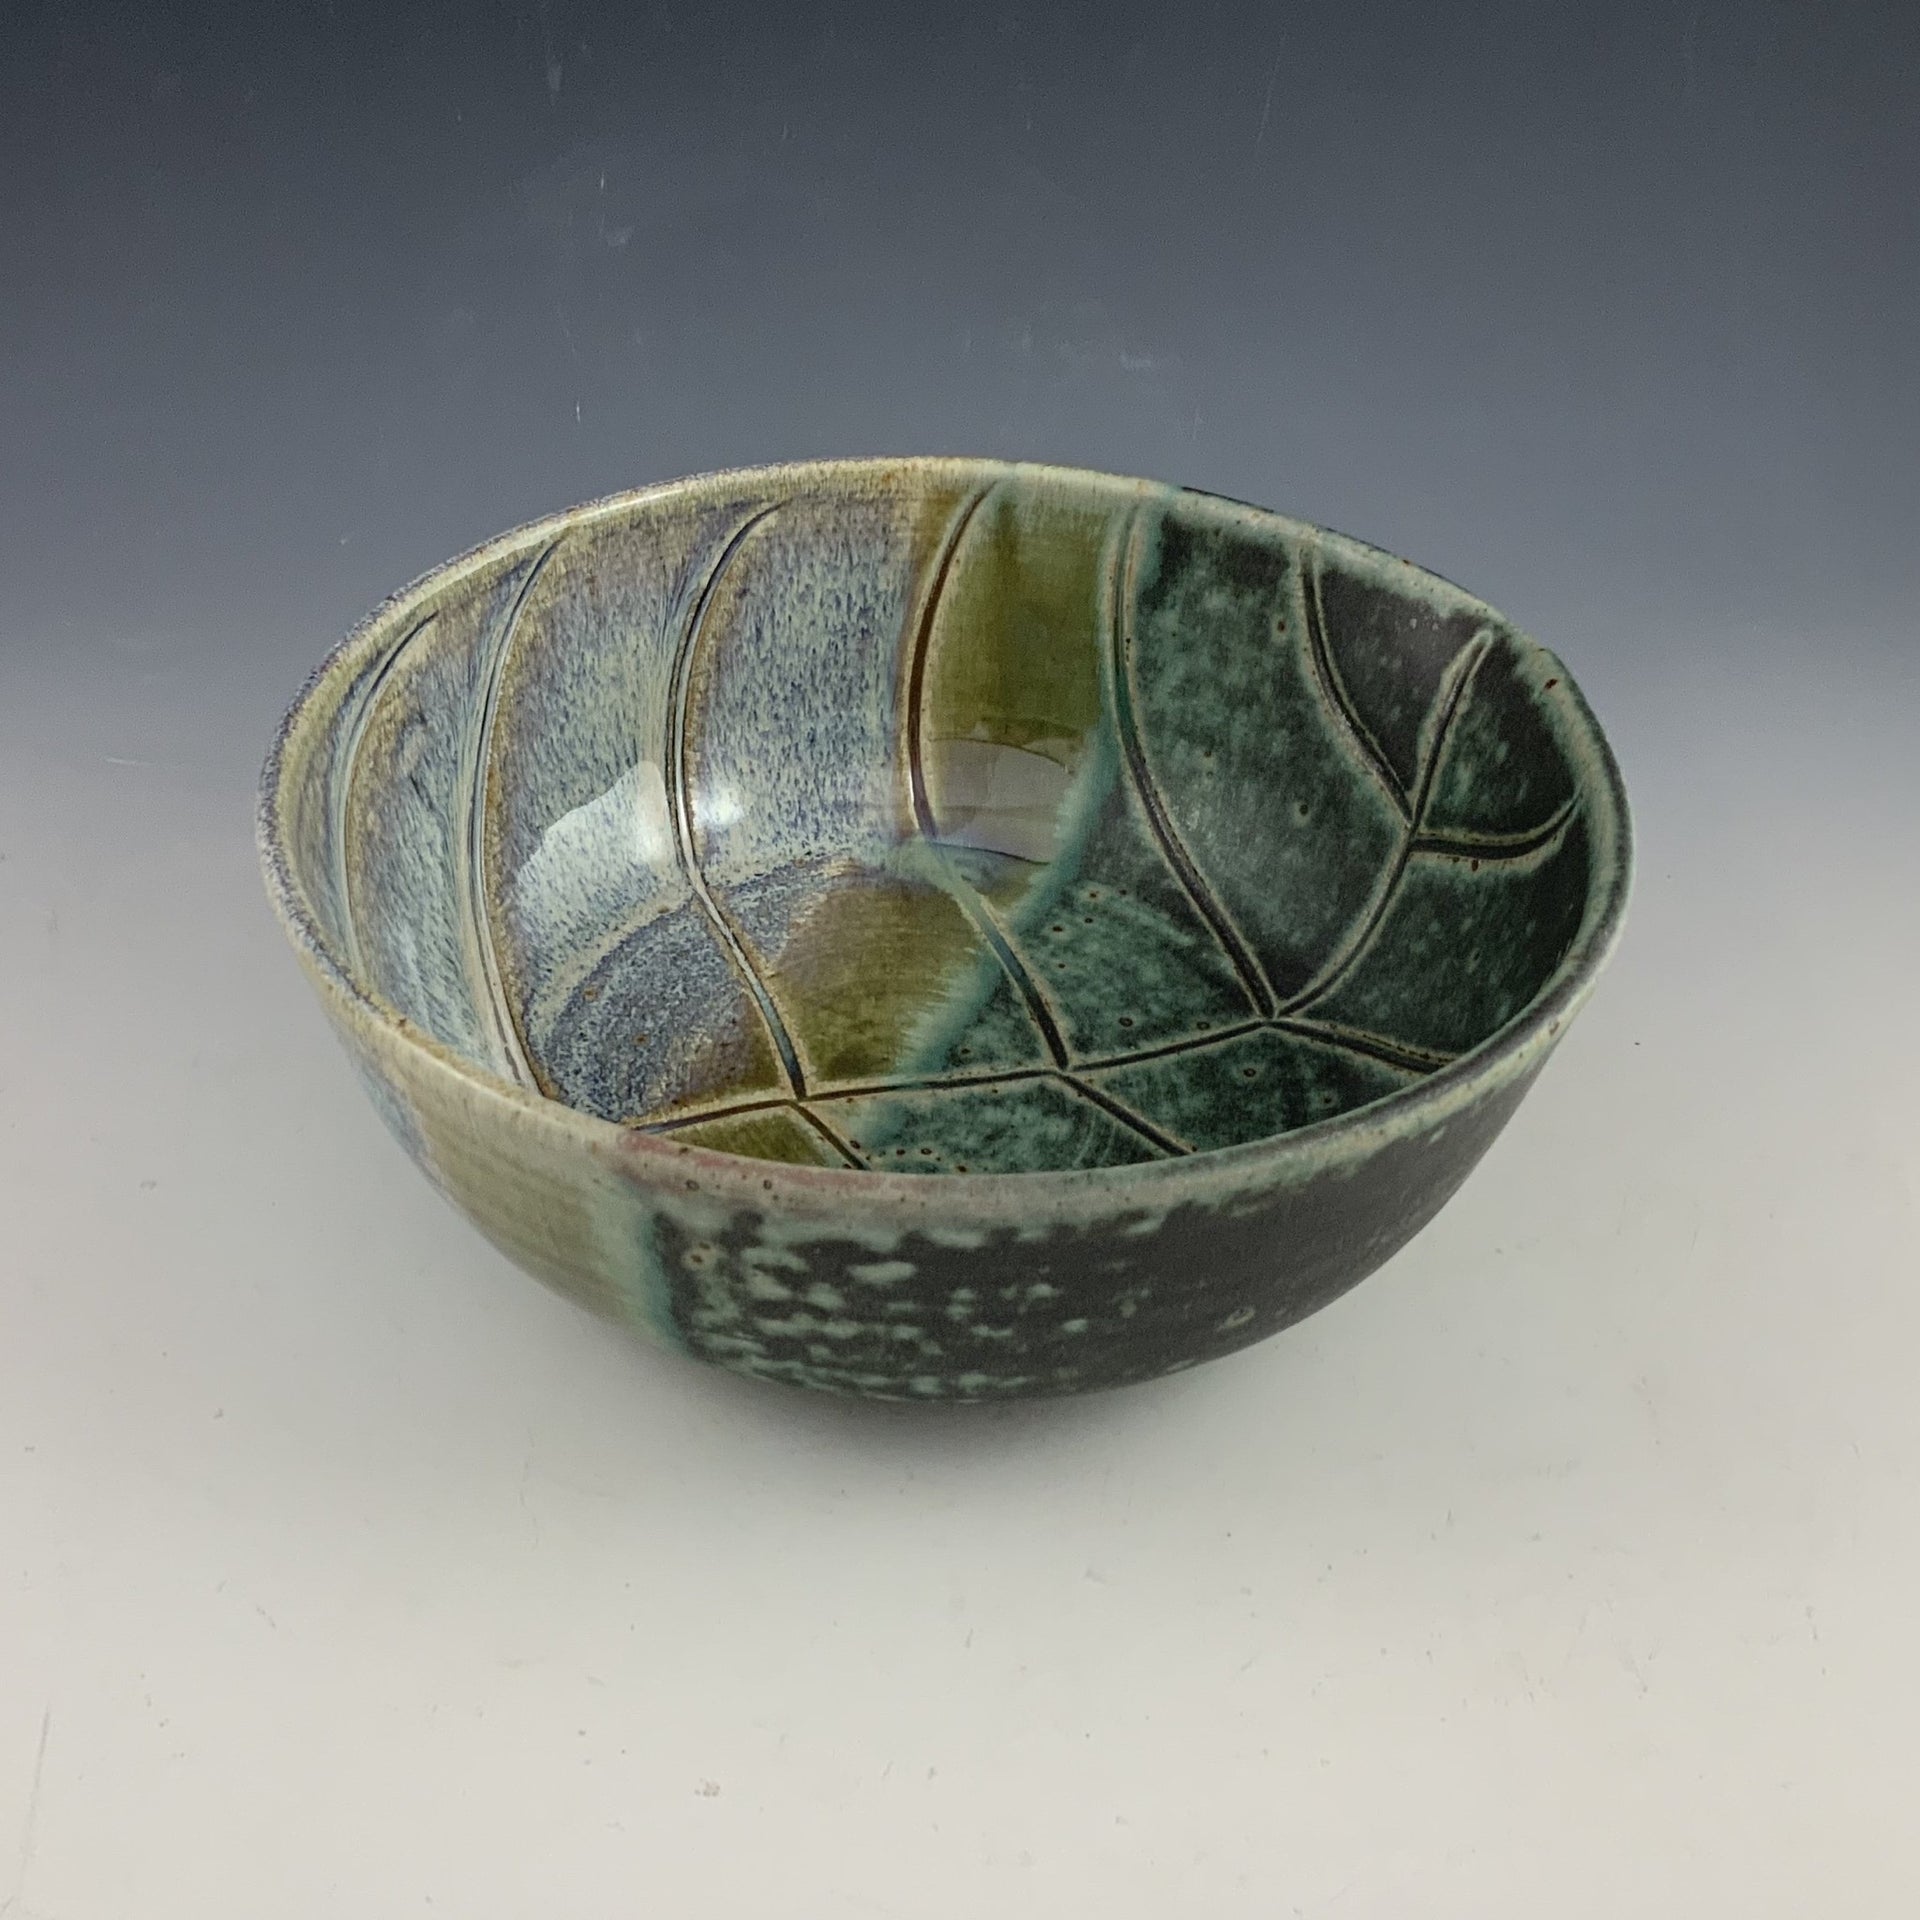 Medium leaf bowl